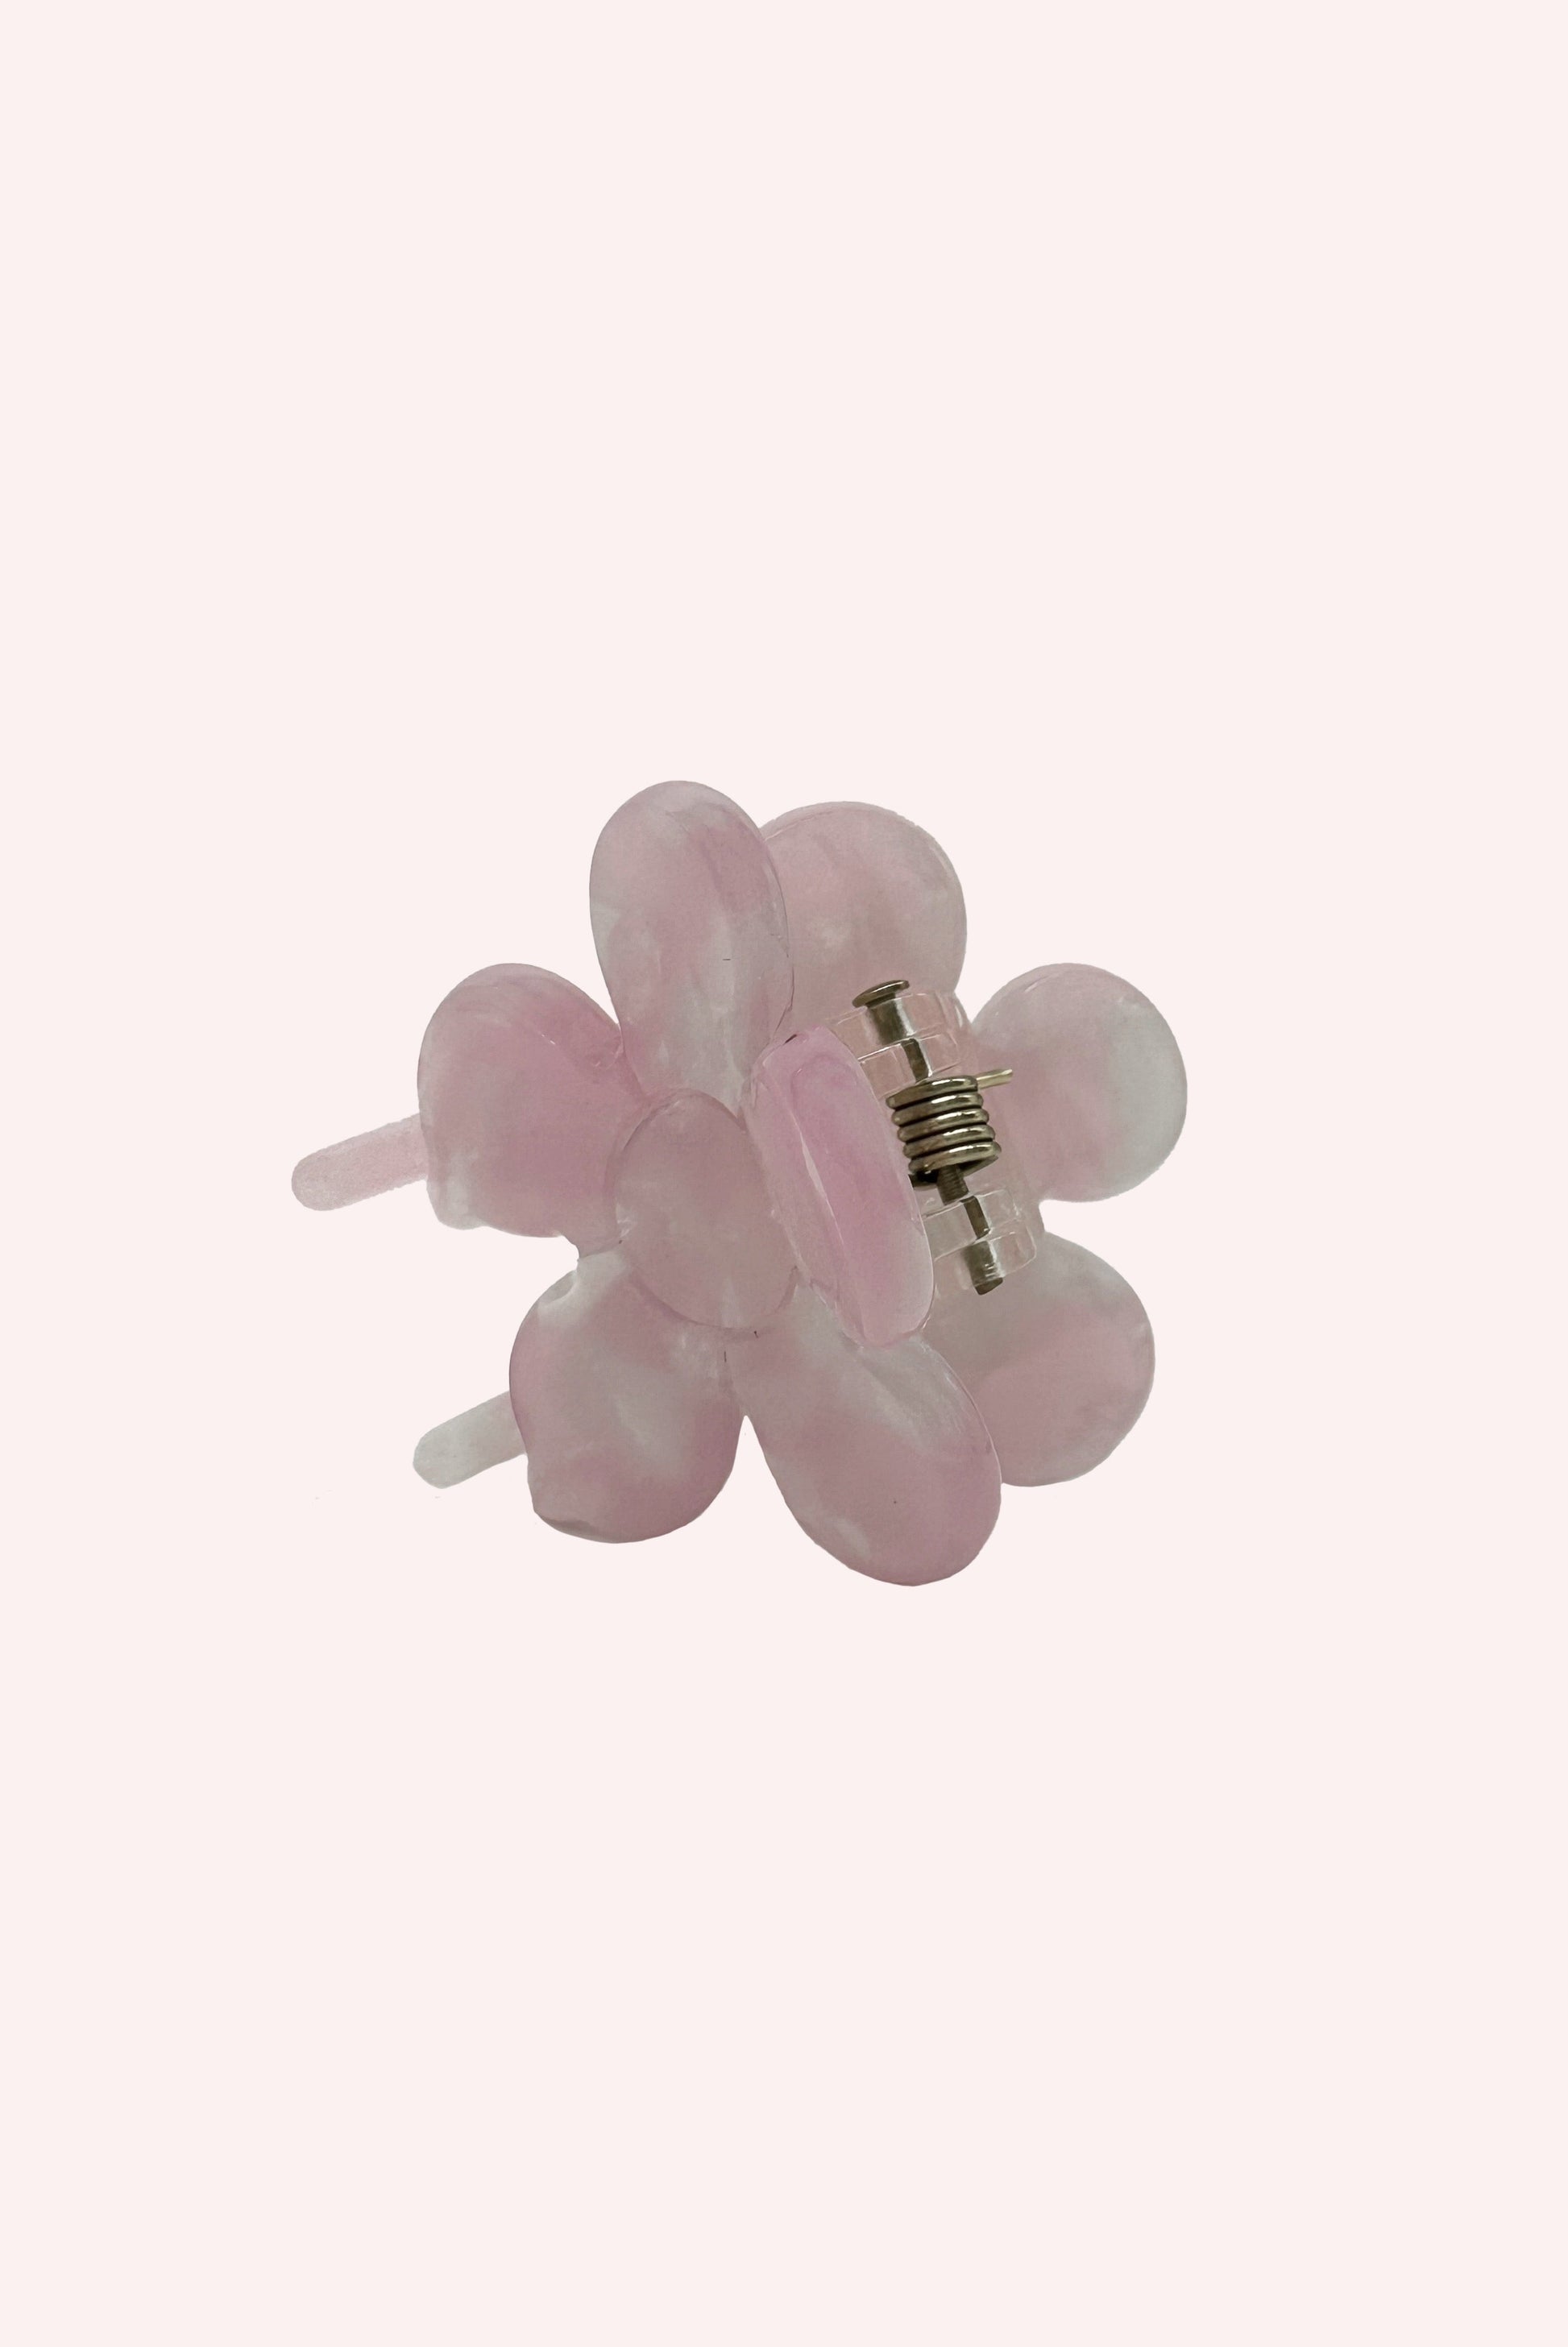 Petite Forget Me Not Flower Clip, Rose Quartz, 5-petal flower, with mechanism for strong grip